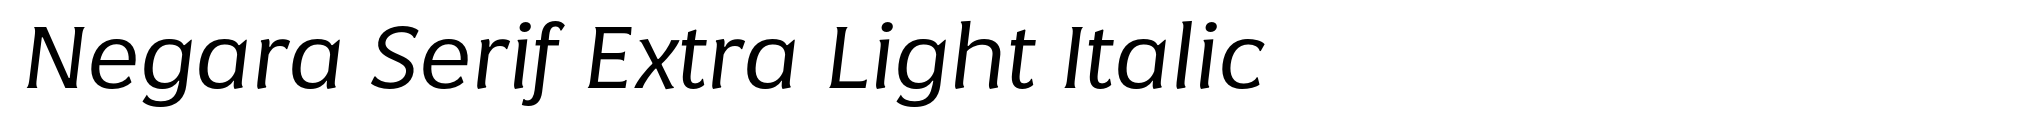 Negara Serif Extra Light Italic image